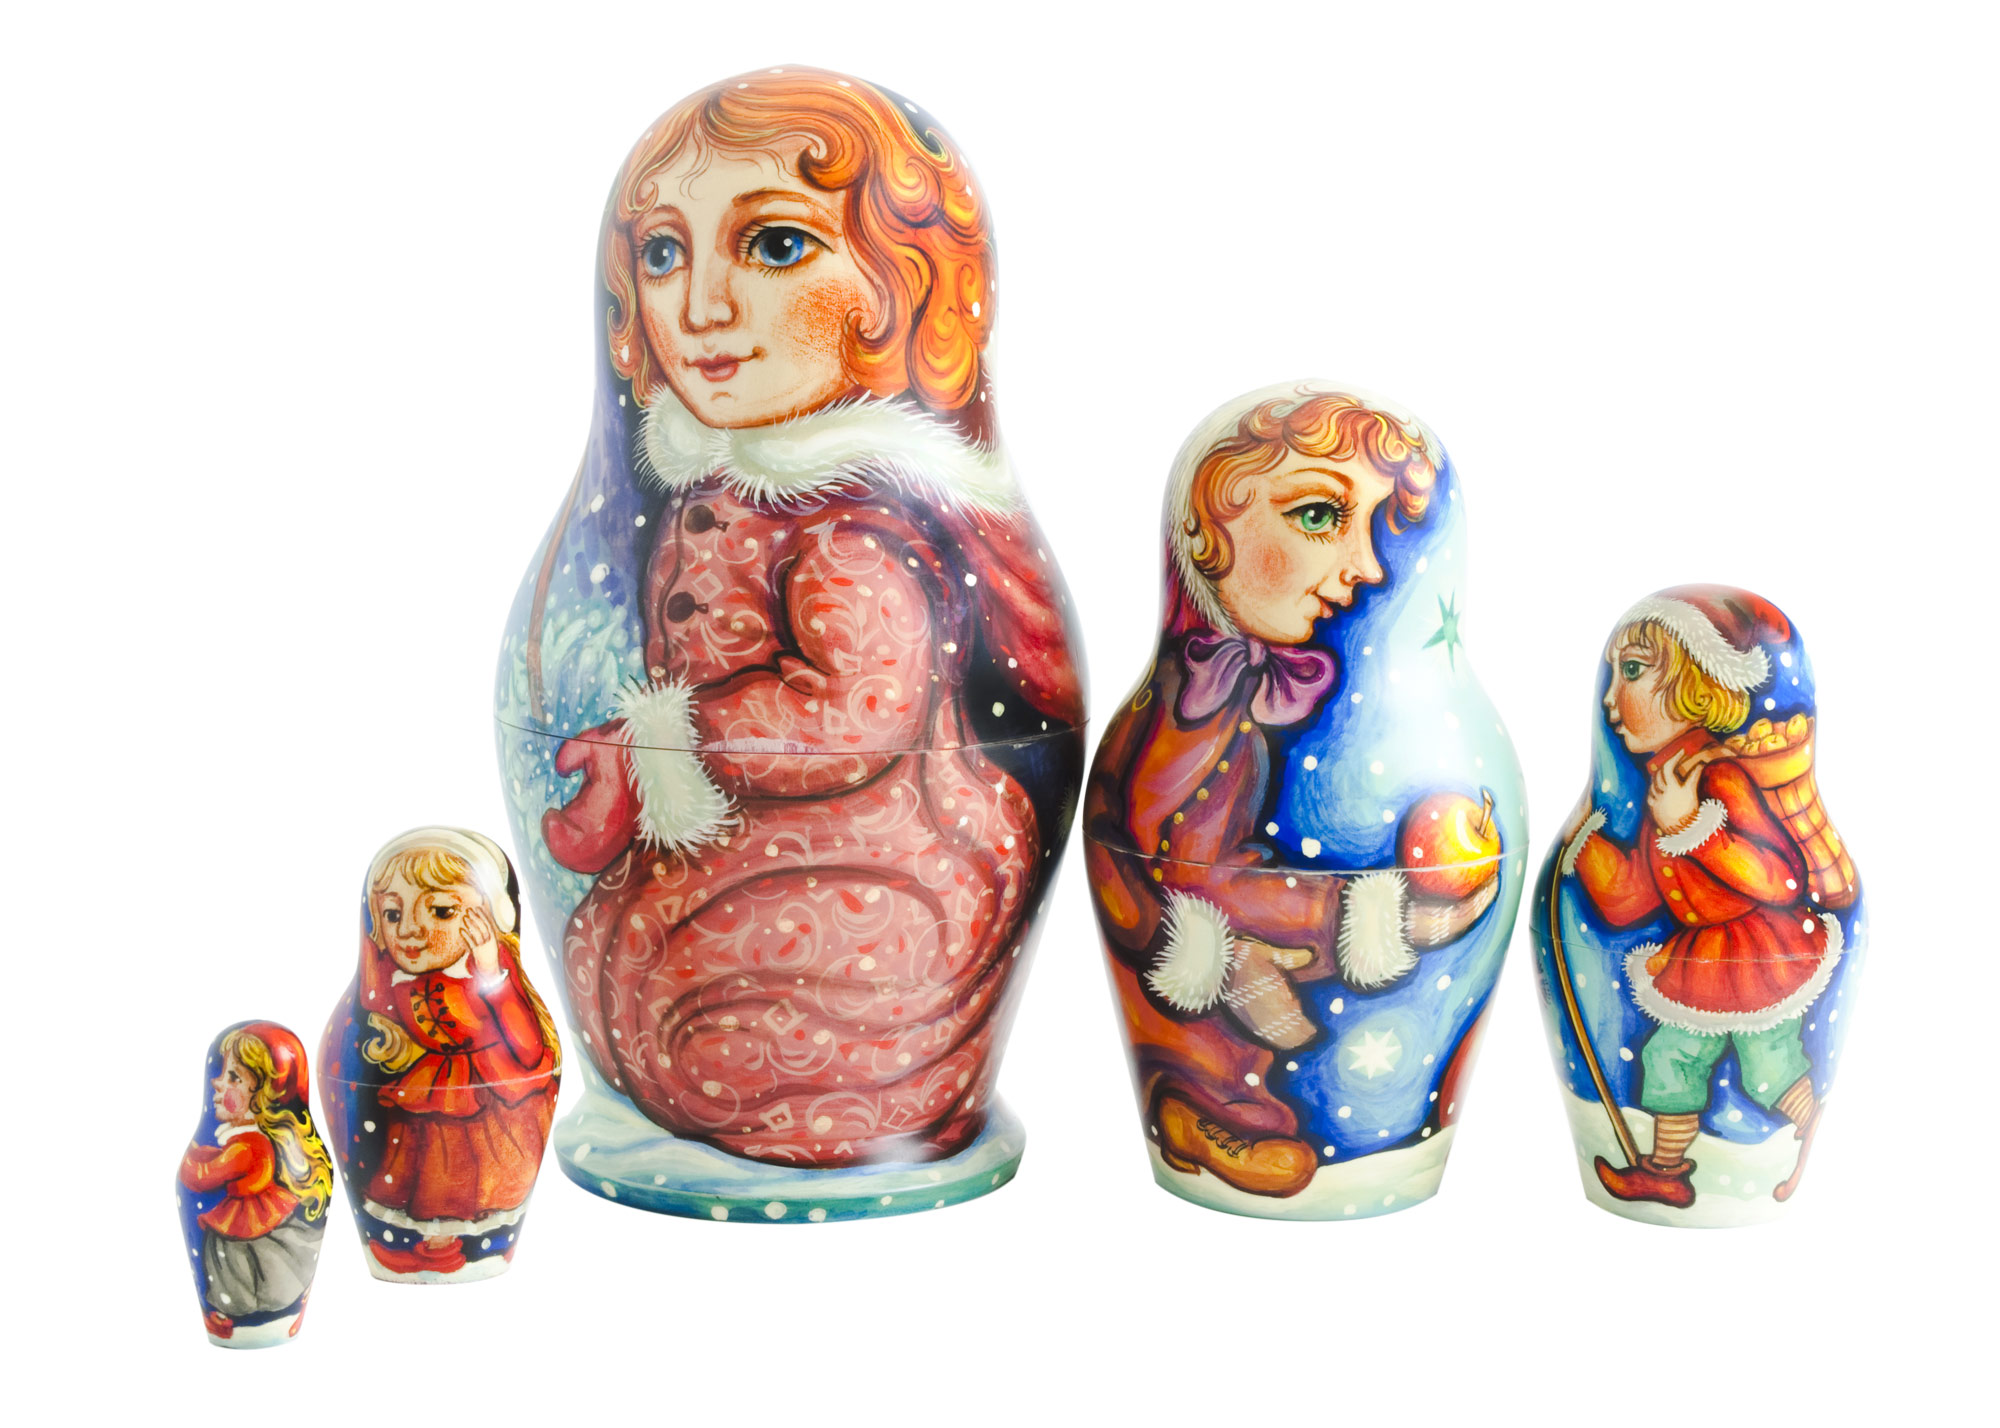 Buy Apples in the Snow Doll by Brudis 6.5" at GoldenCockerel.com